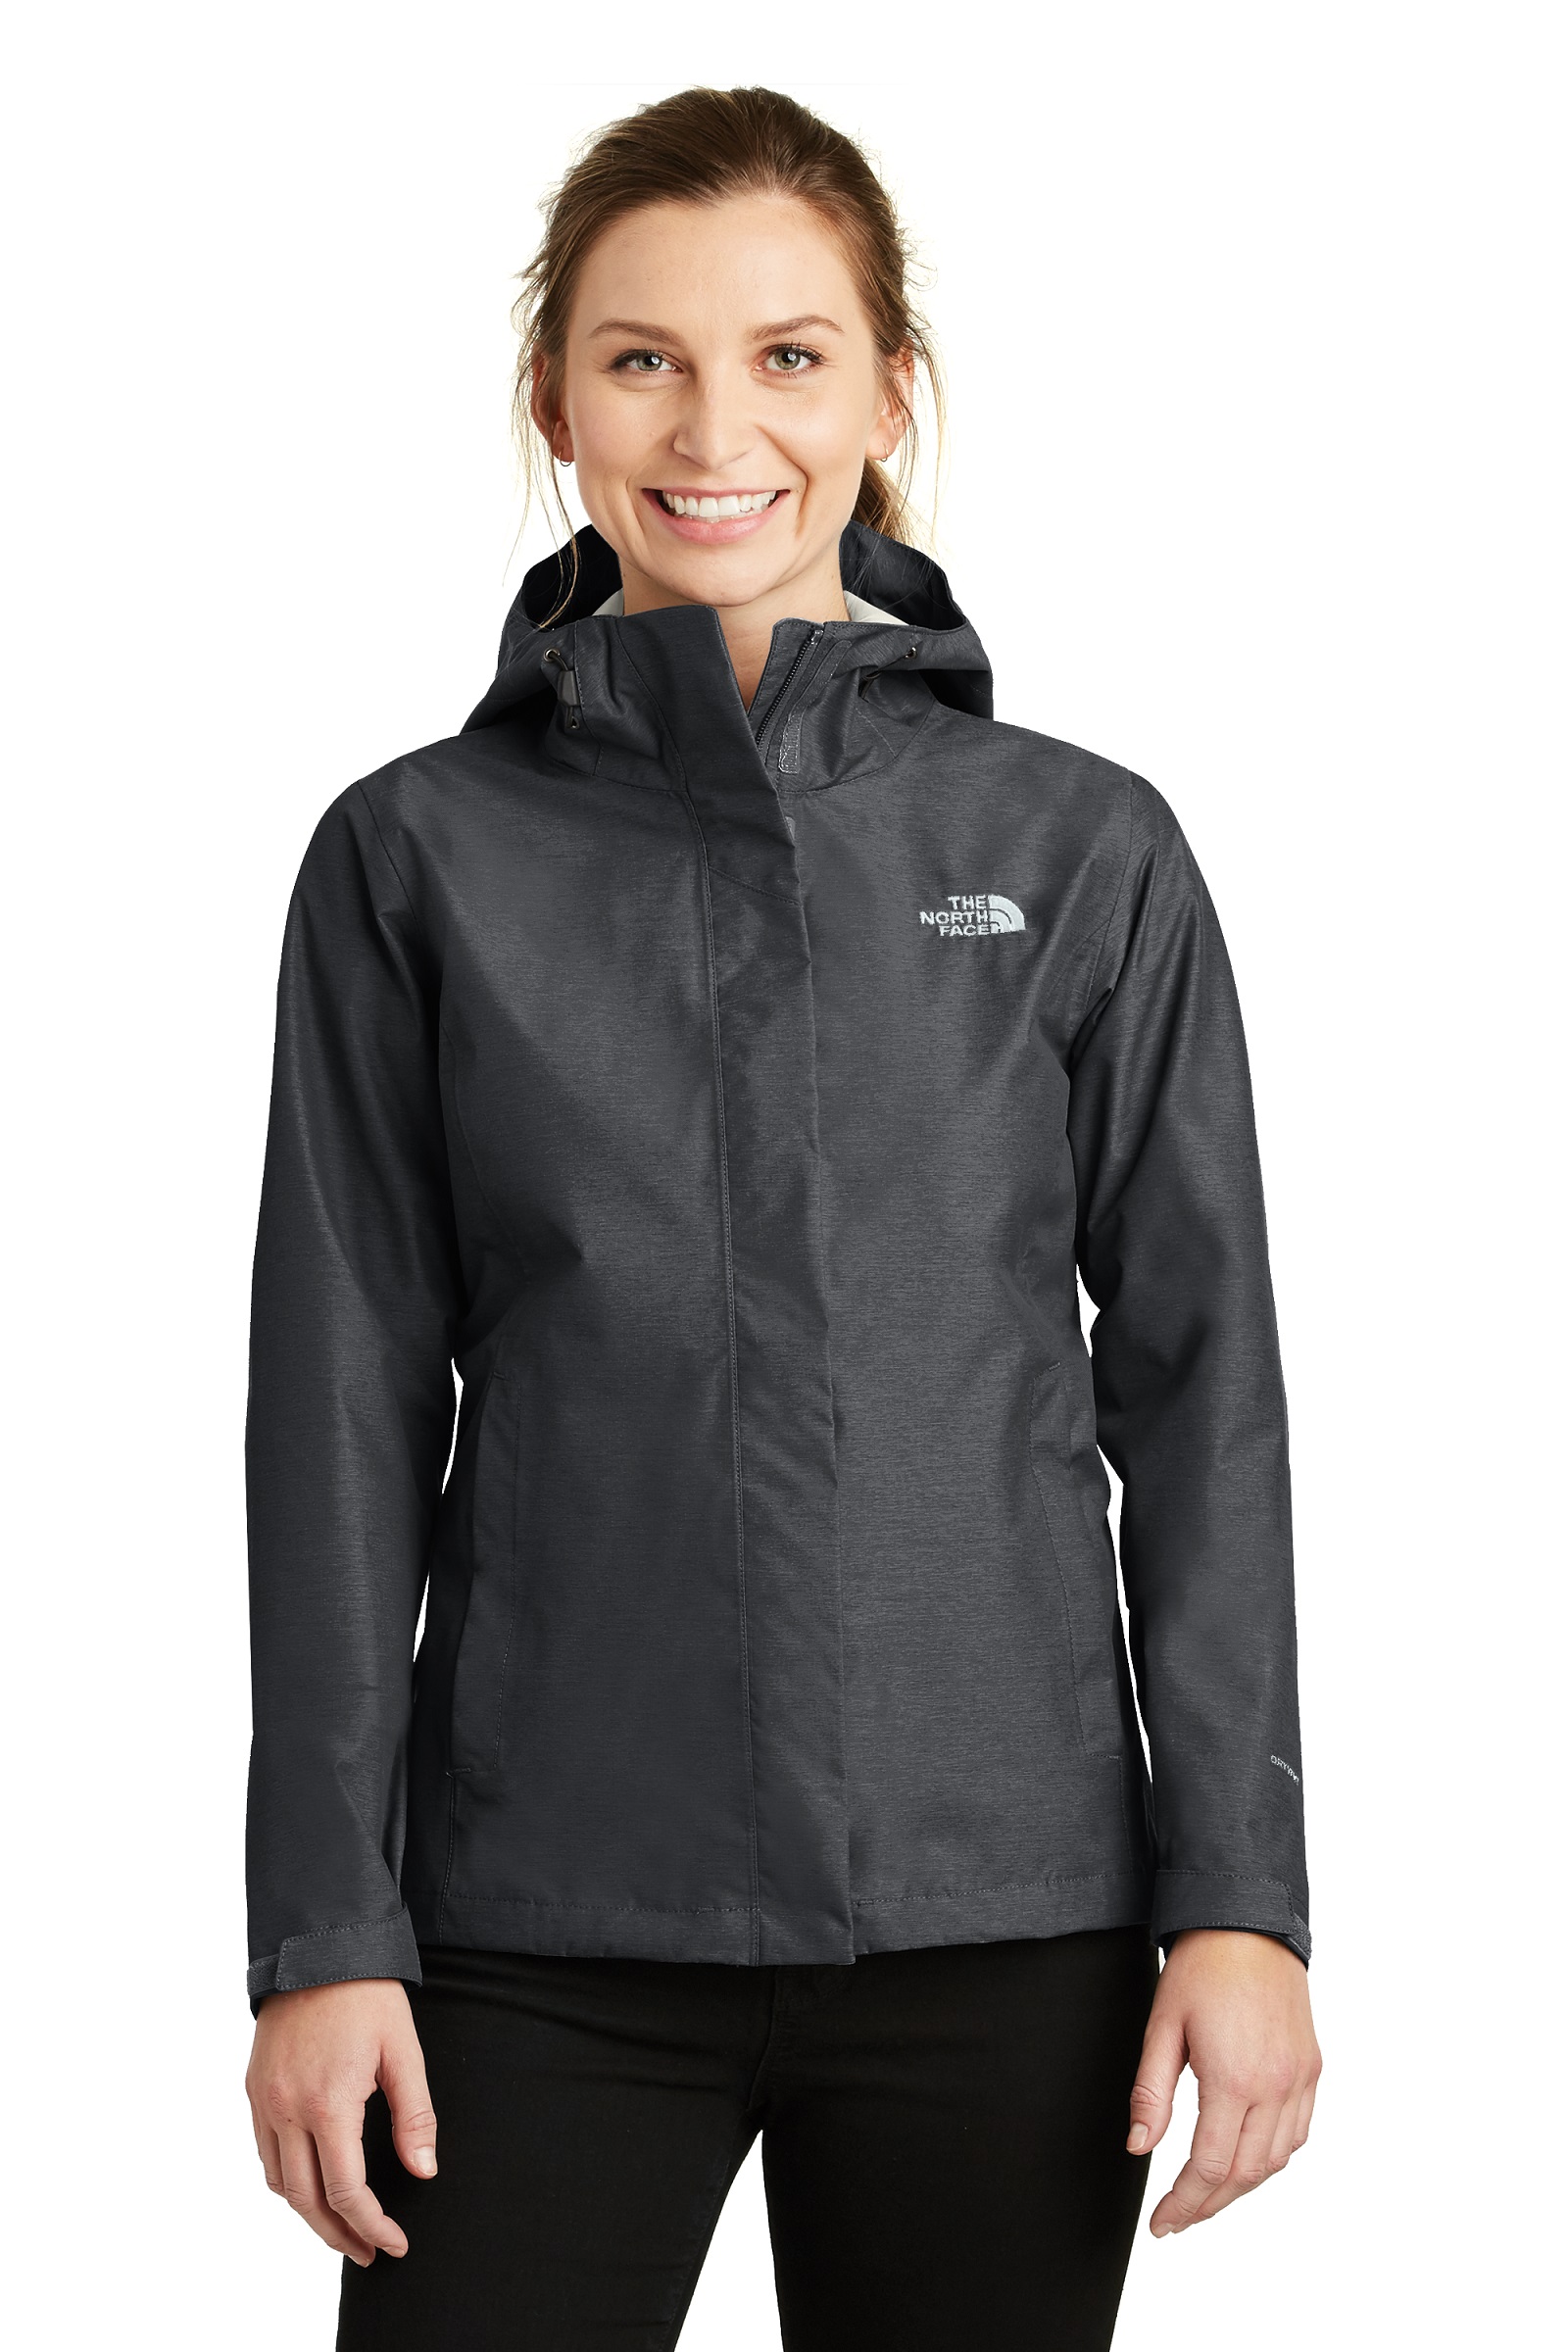 The North Face Women's DryVent Rain Jacket